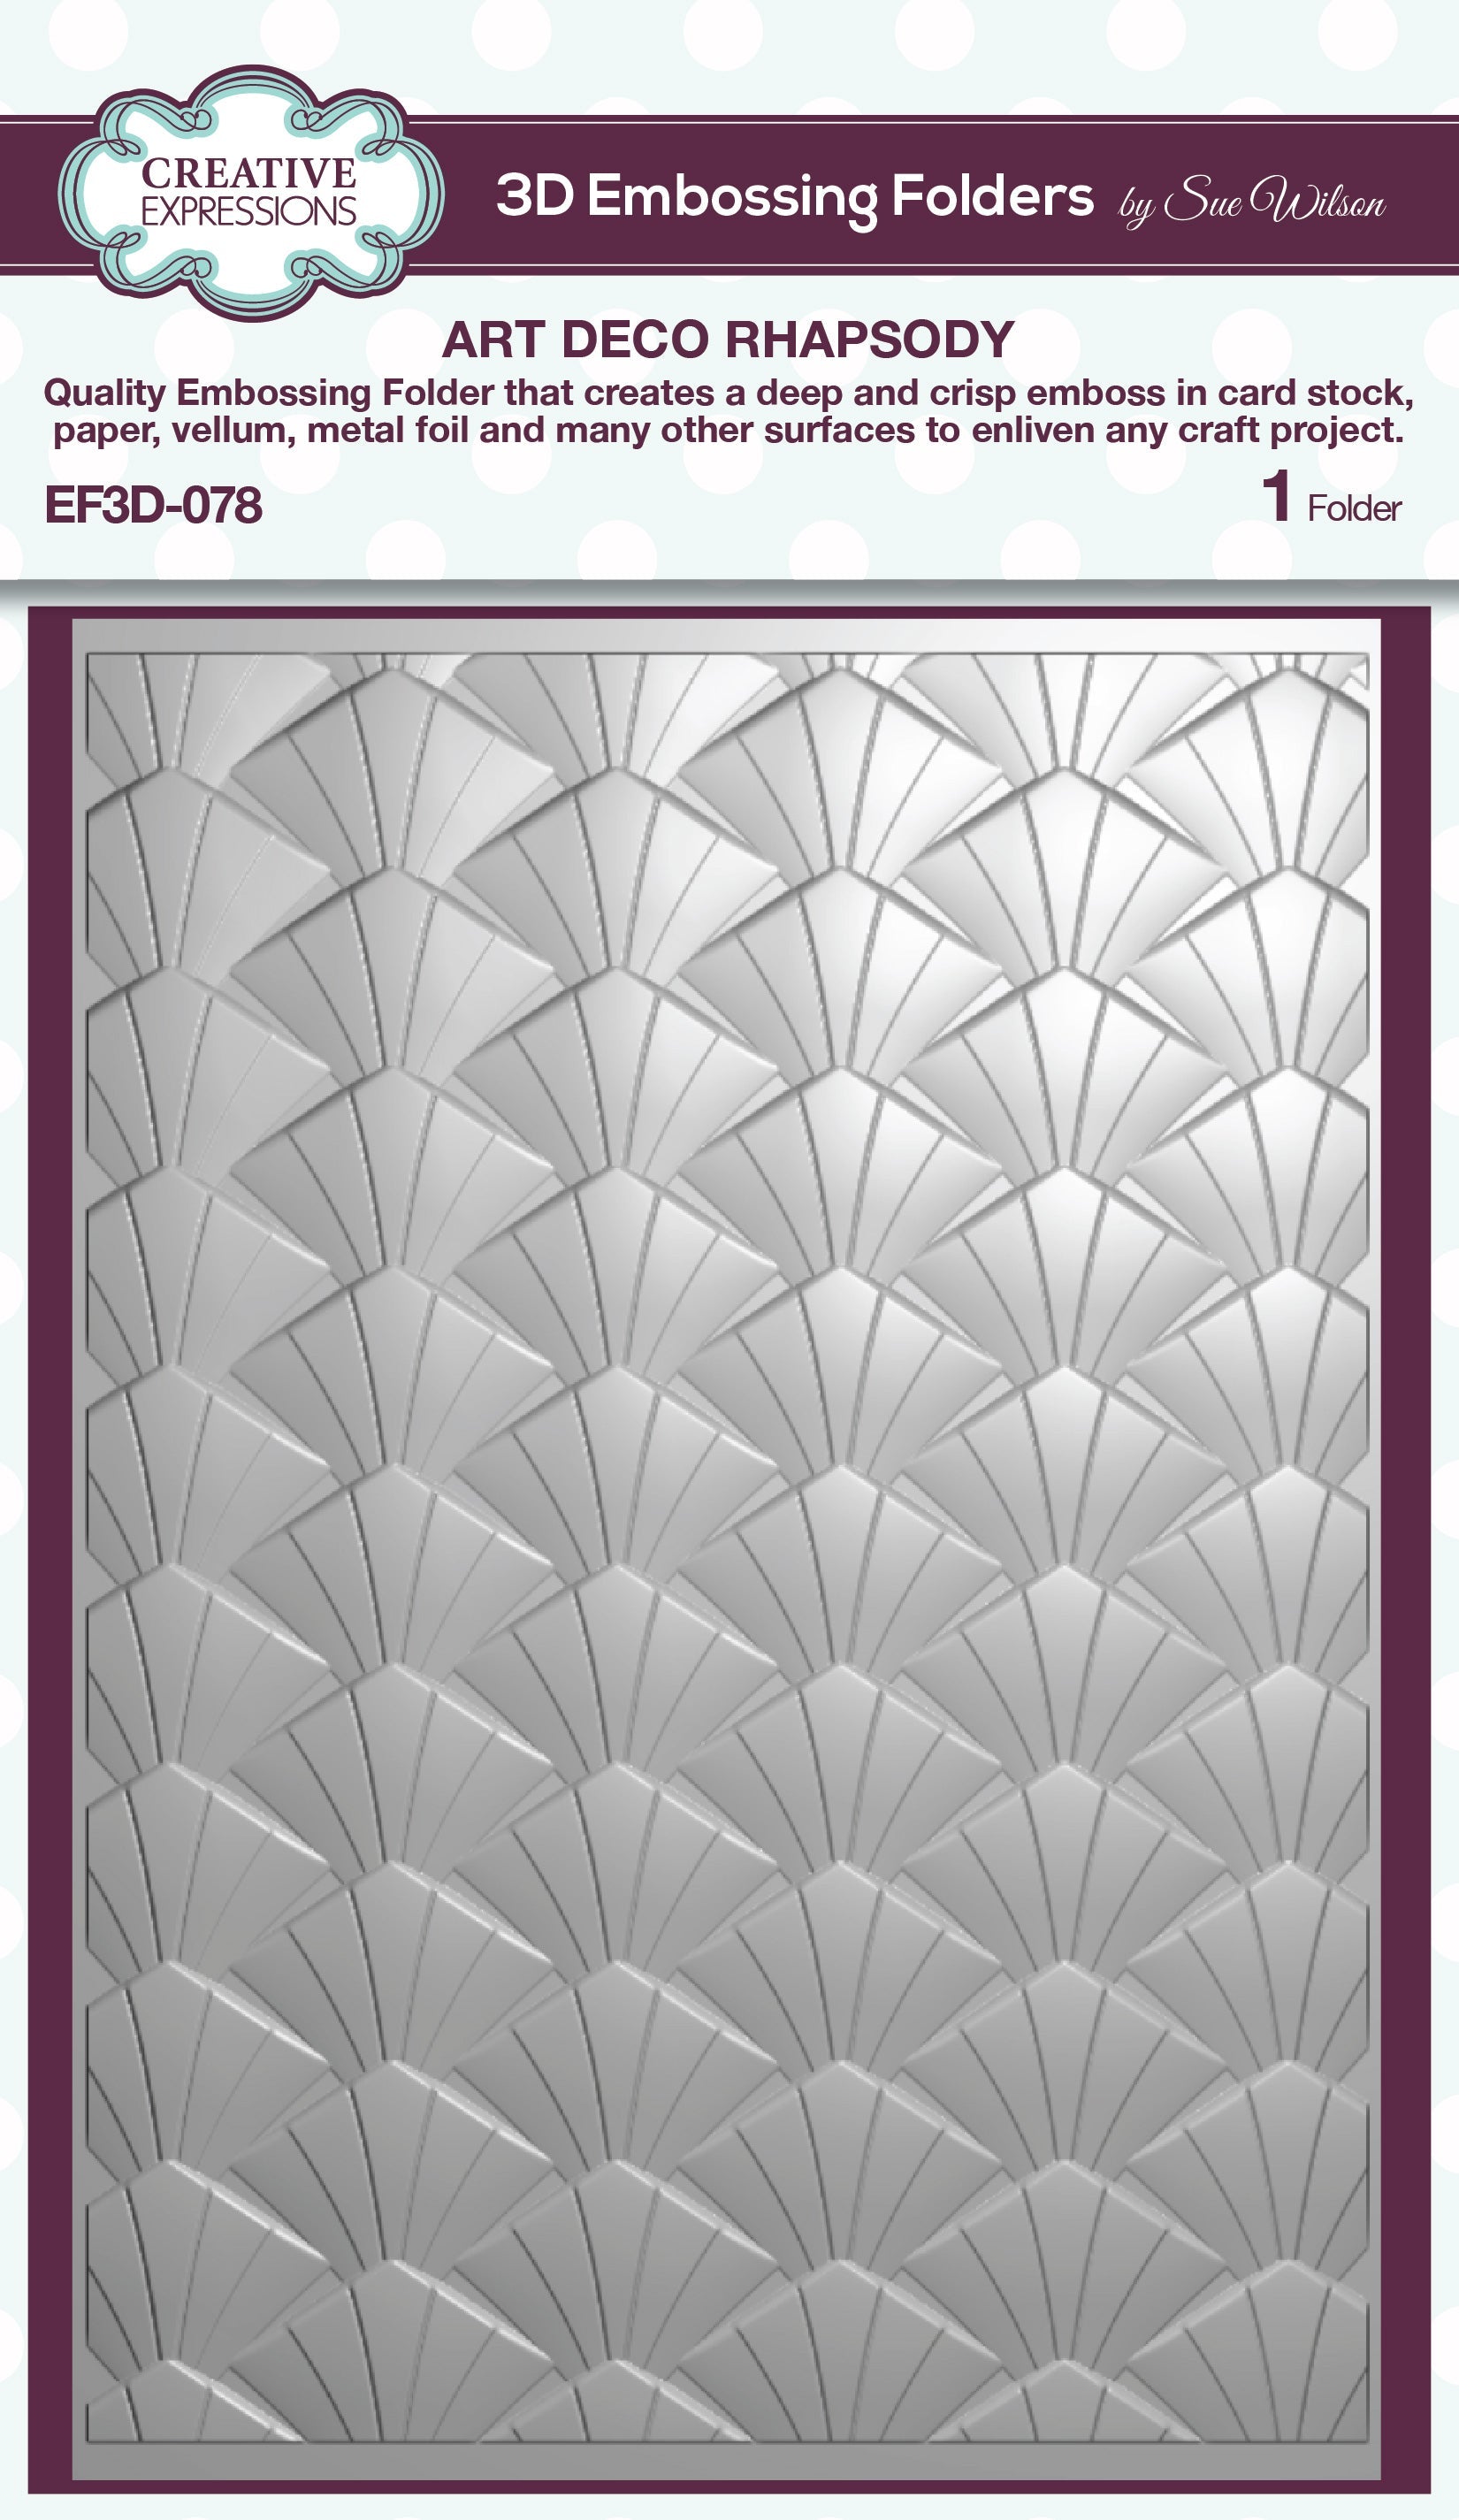 Creative Expressions Art Deco Rhapsody 5 in x 7 in 3D Embossing Folder